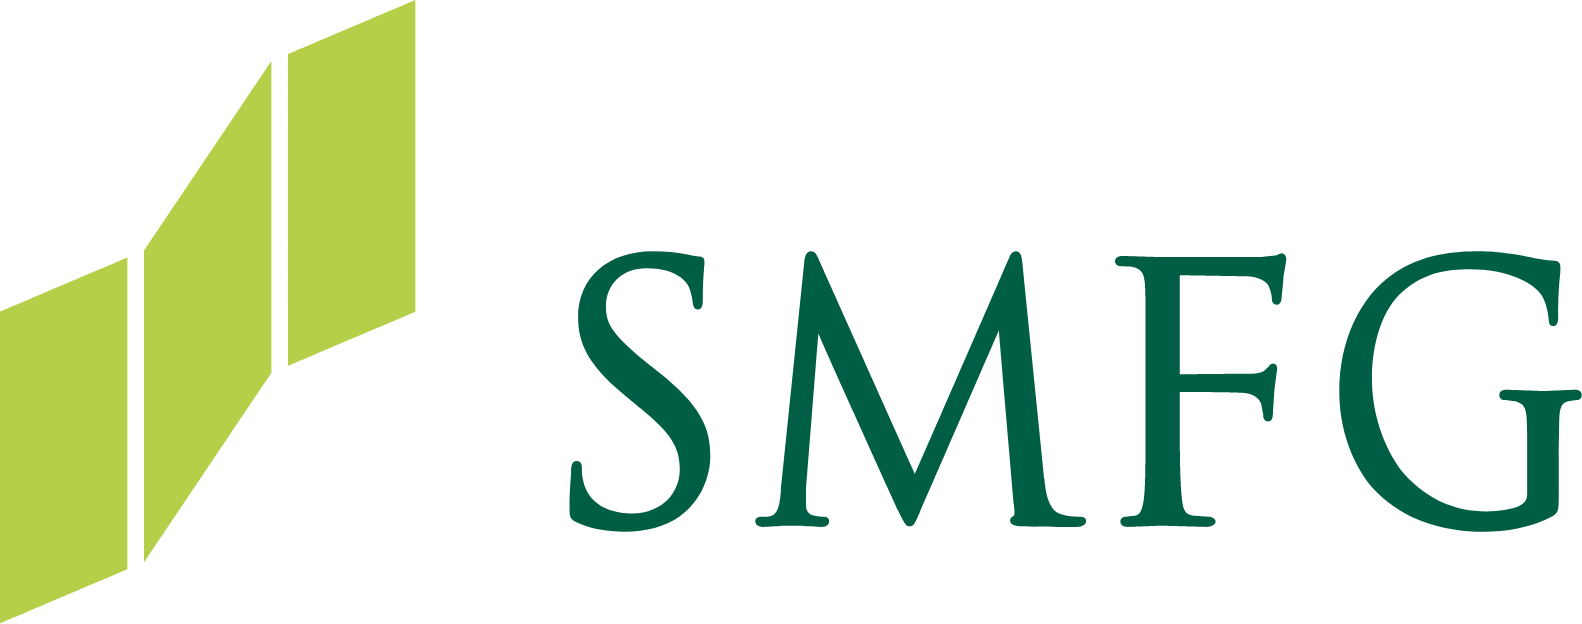 Sumitomo Mitsui Financial Group logo large (transparent PNG)